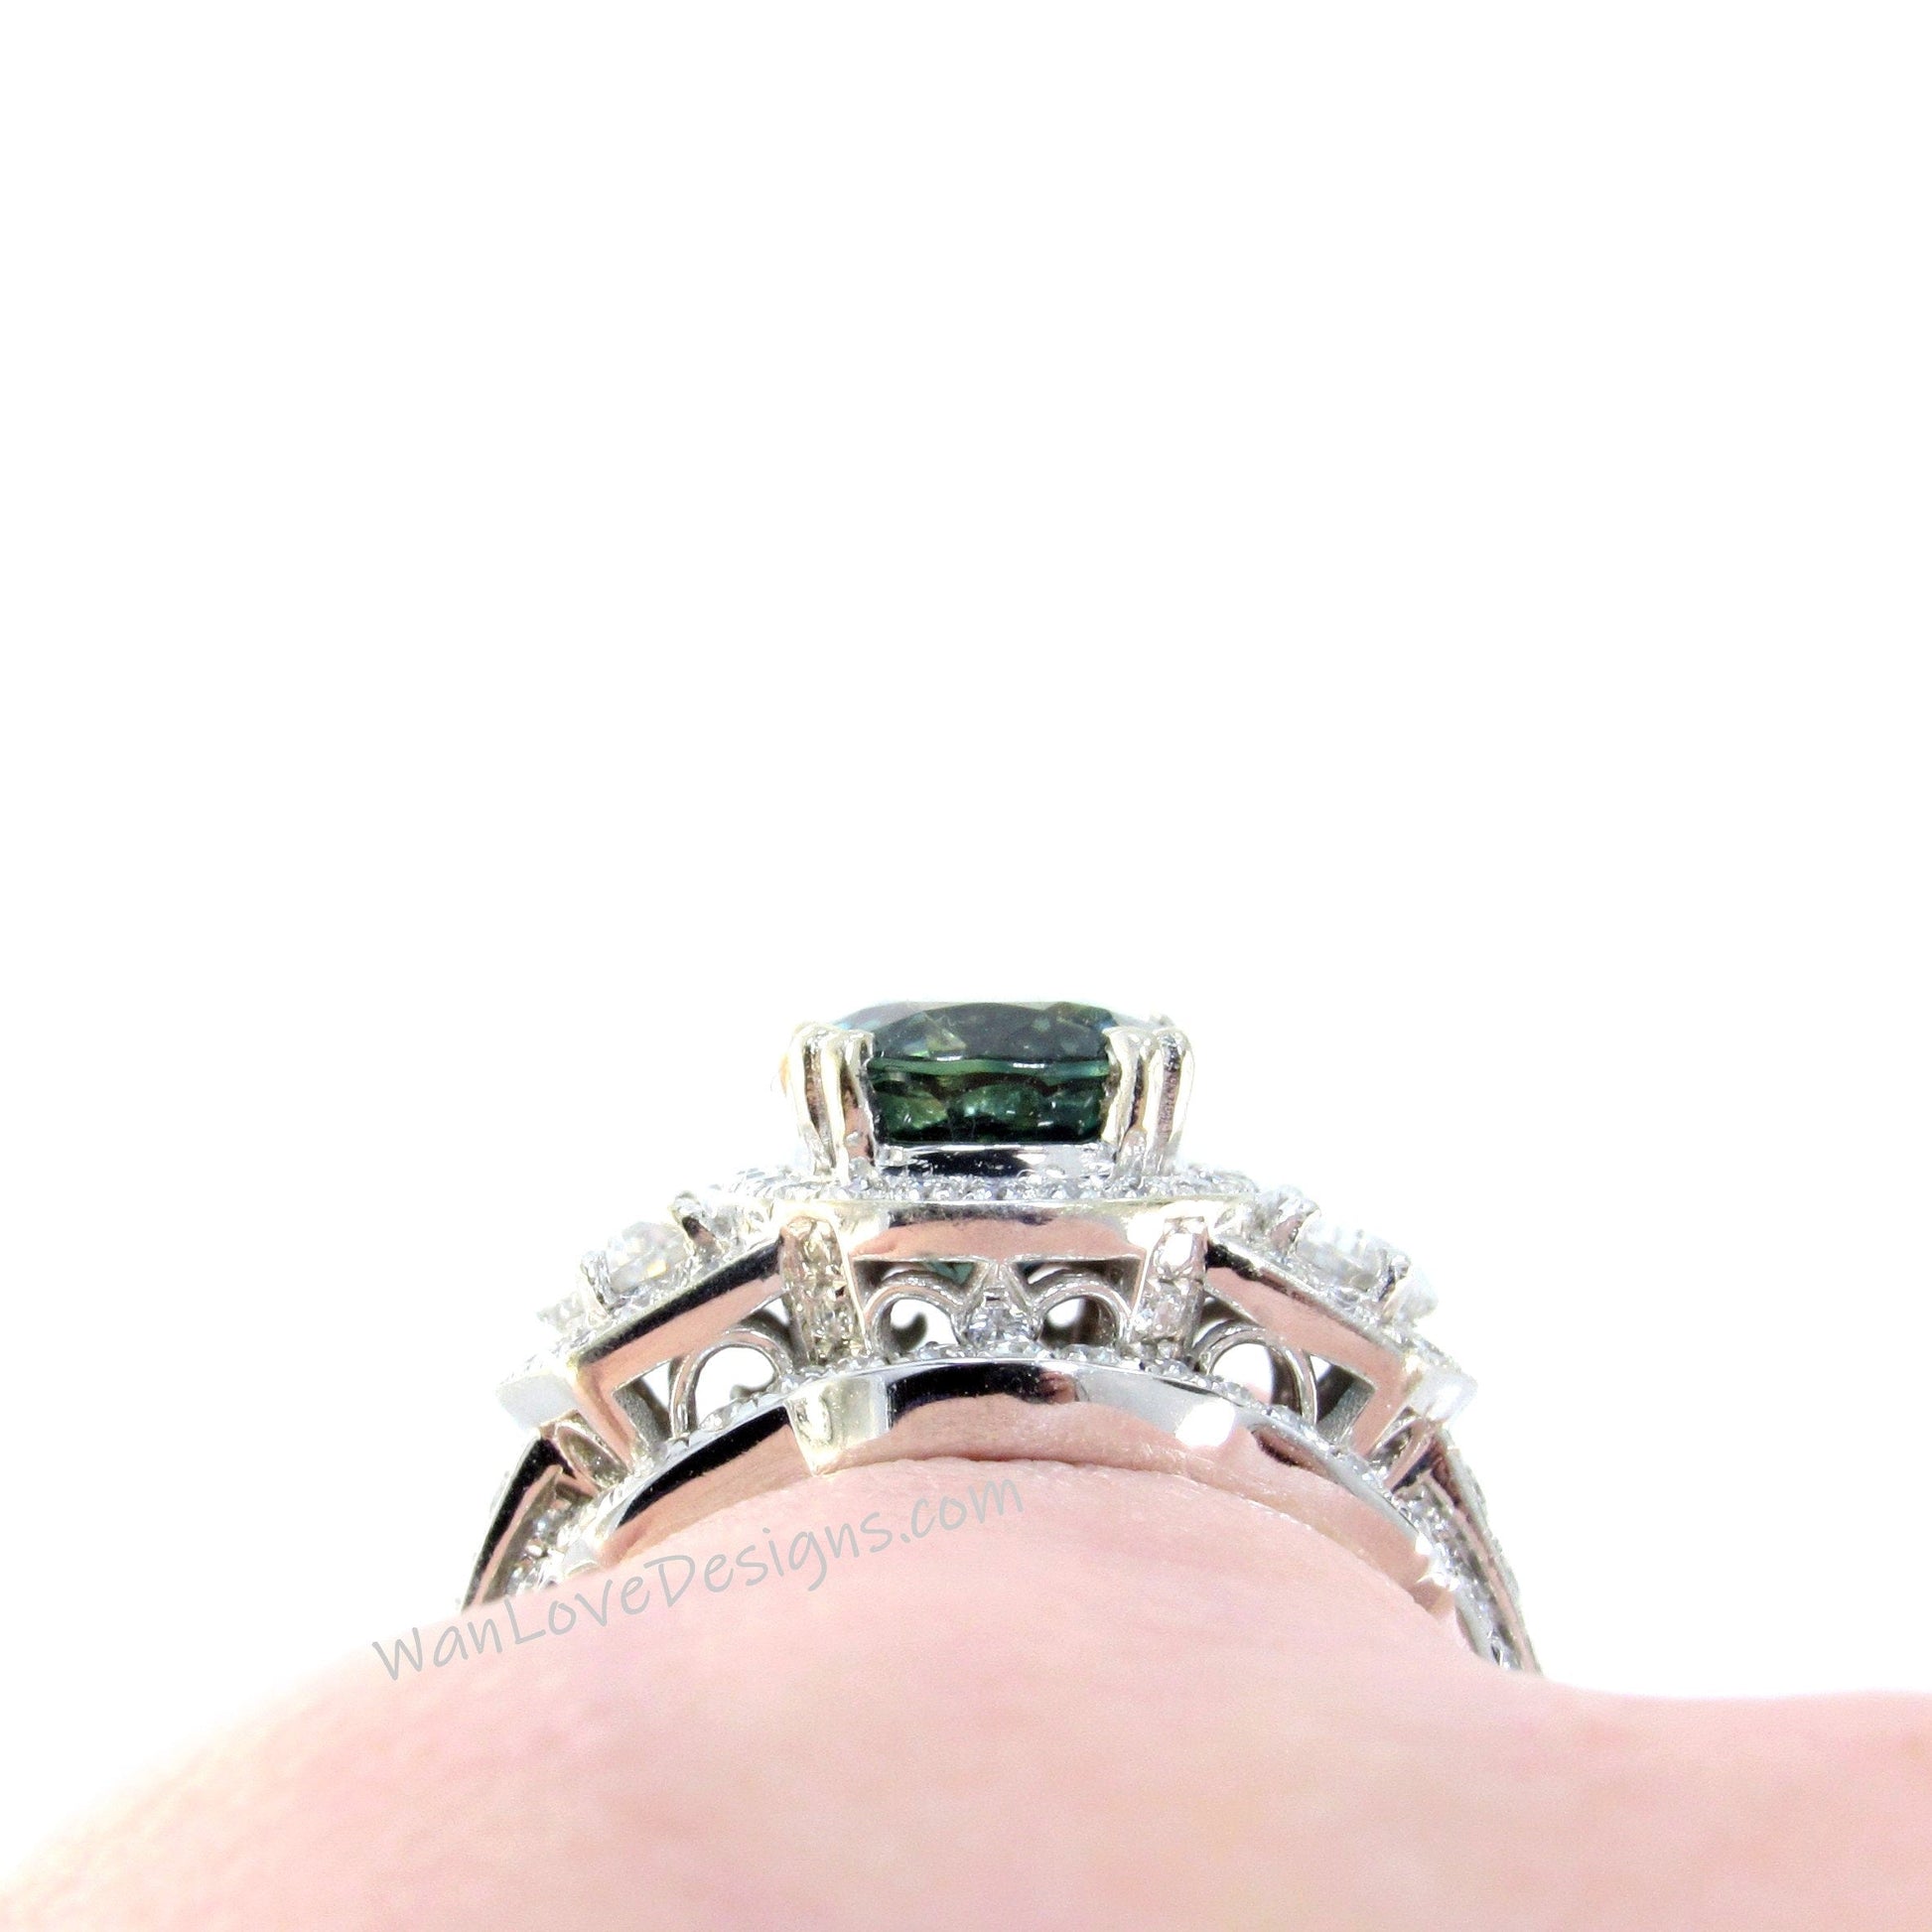 3ct Diamond Oval half moon trapezoid Engagement Ring Set Curved Nesting Wedding Band Art deco ring Oval Cut Engagement Ring, Bridal Gift Wan Love Designs